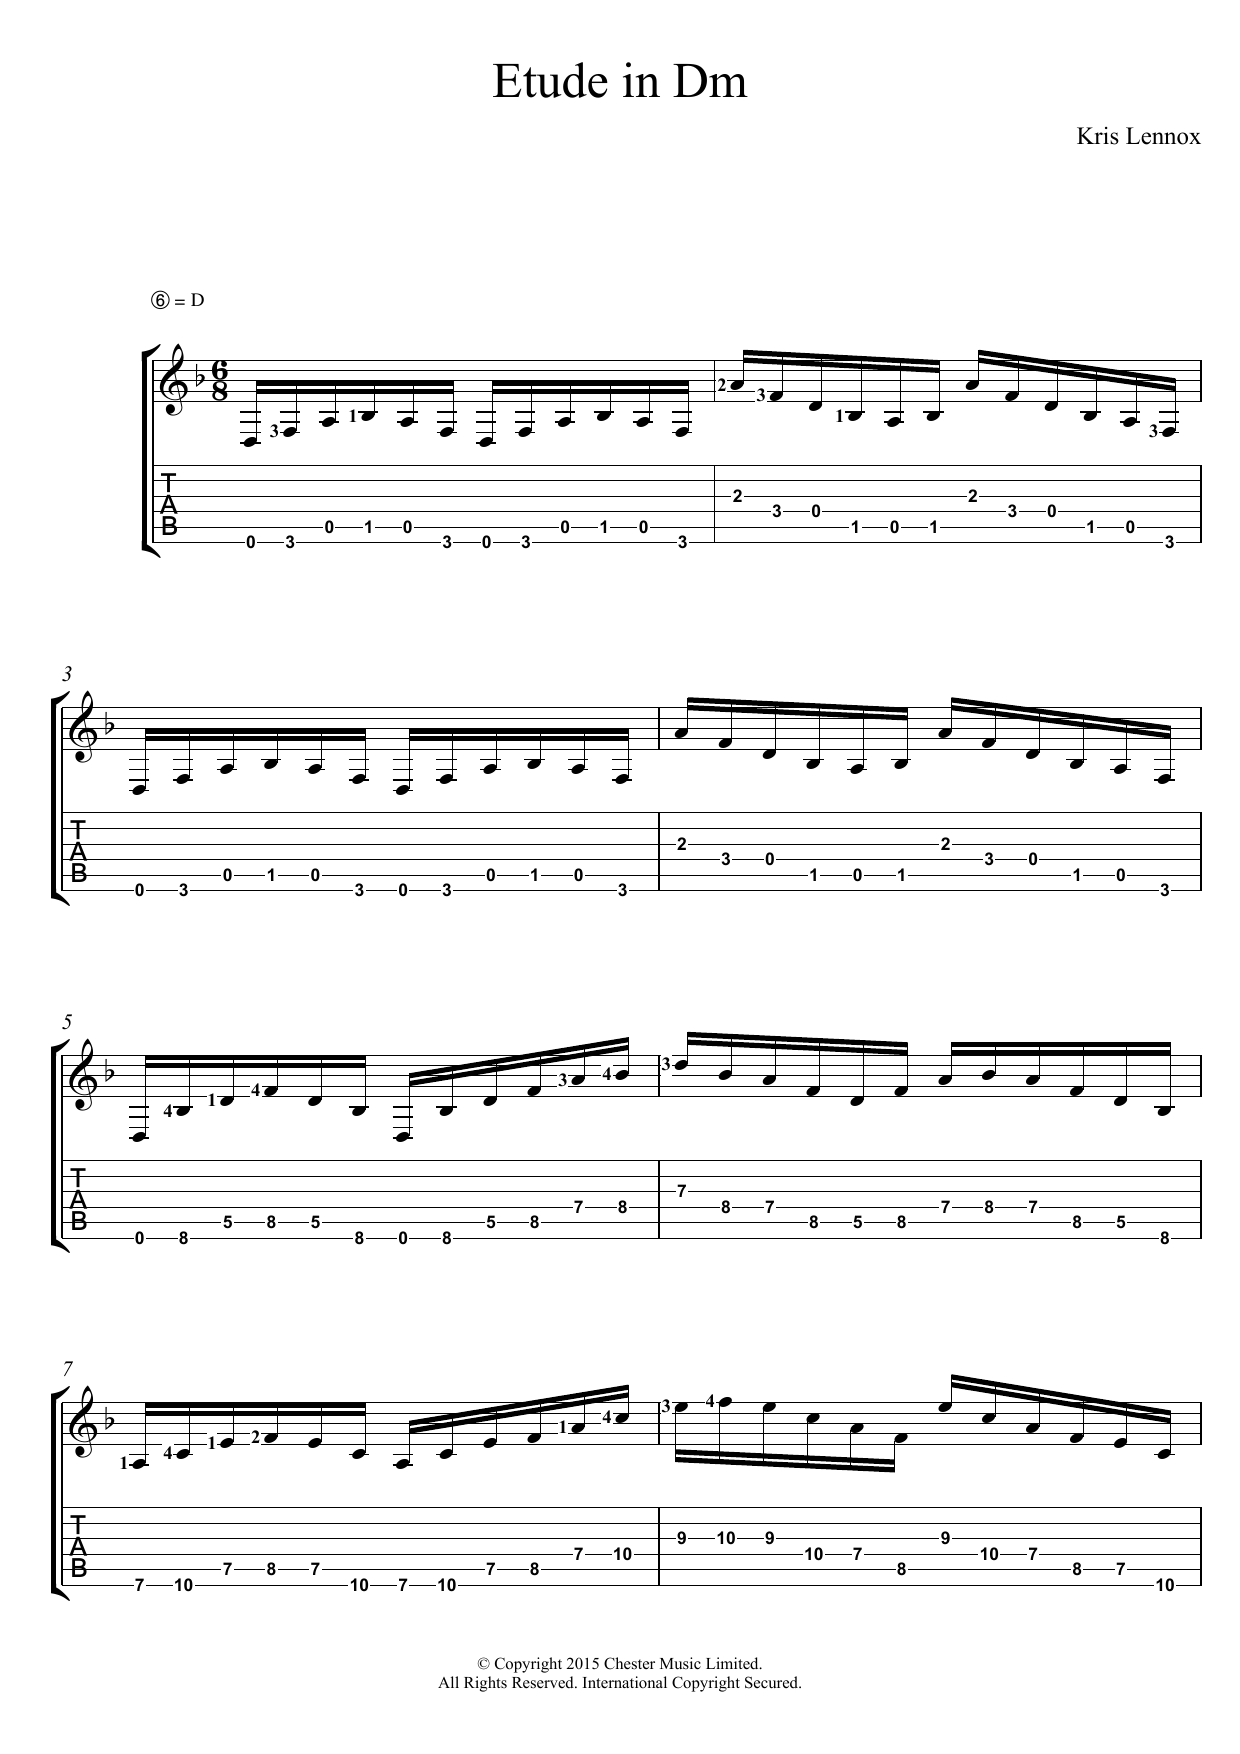 Kris Lennox Etude In Dm Sheet Music Notes & Chords for Guitar Tab - Download or Print PDF